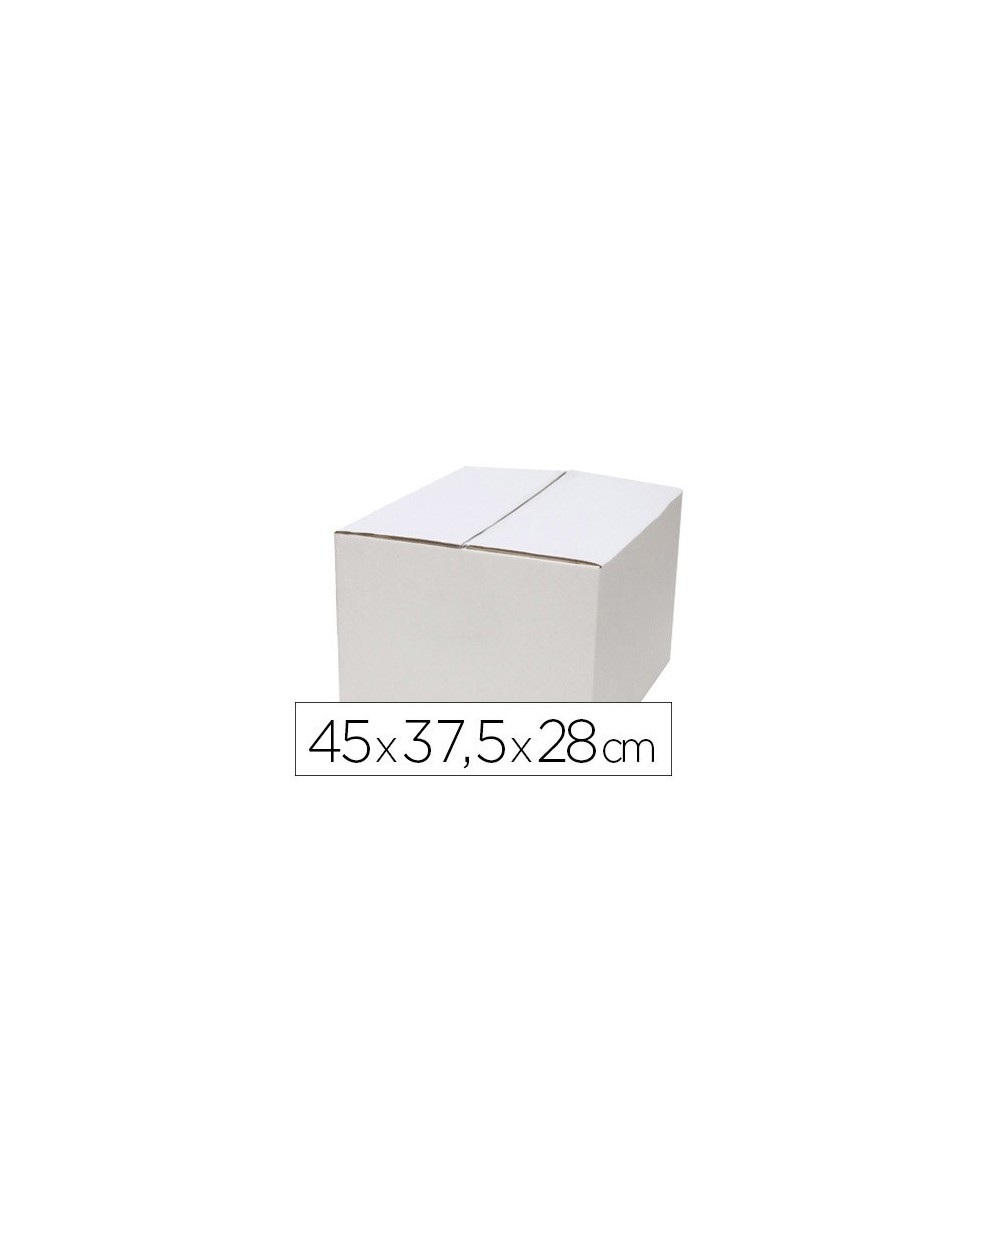 Caja para embalar q connect blanca regulable en altura doble canal 450x280 mm